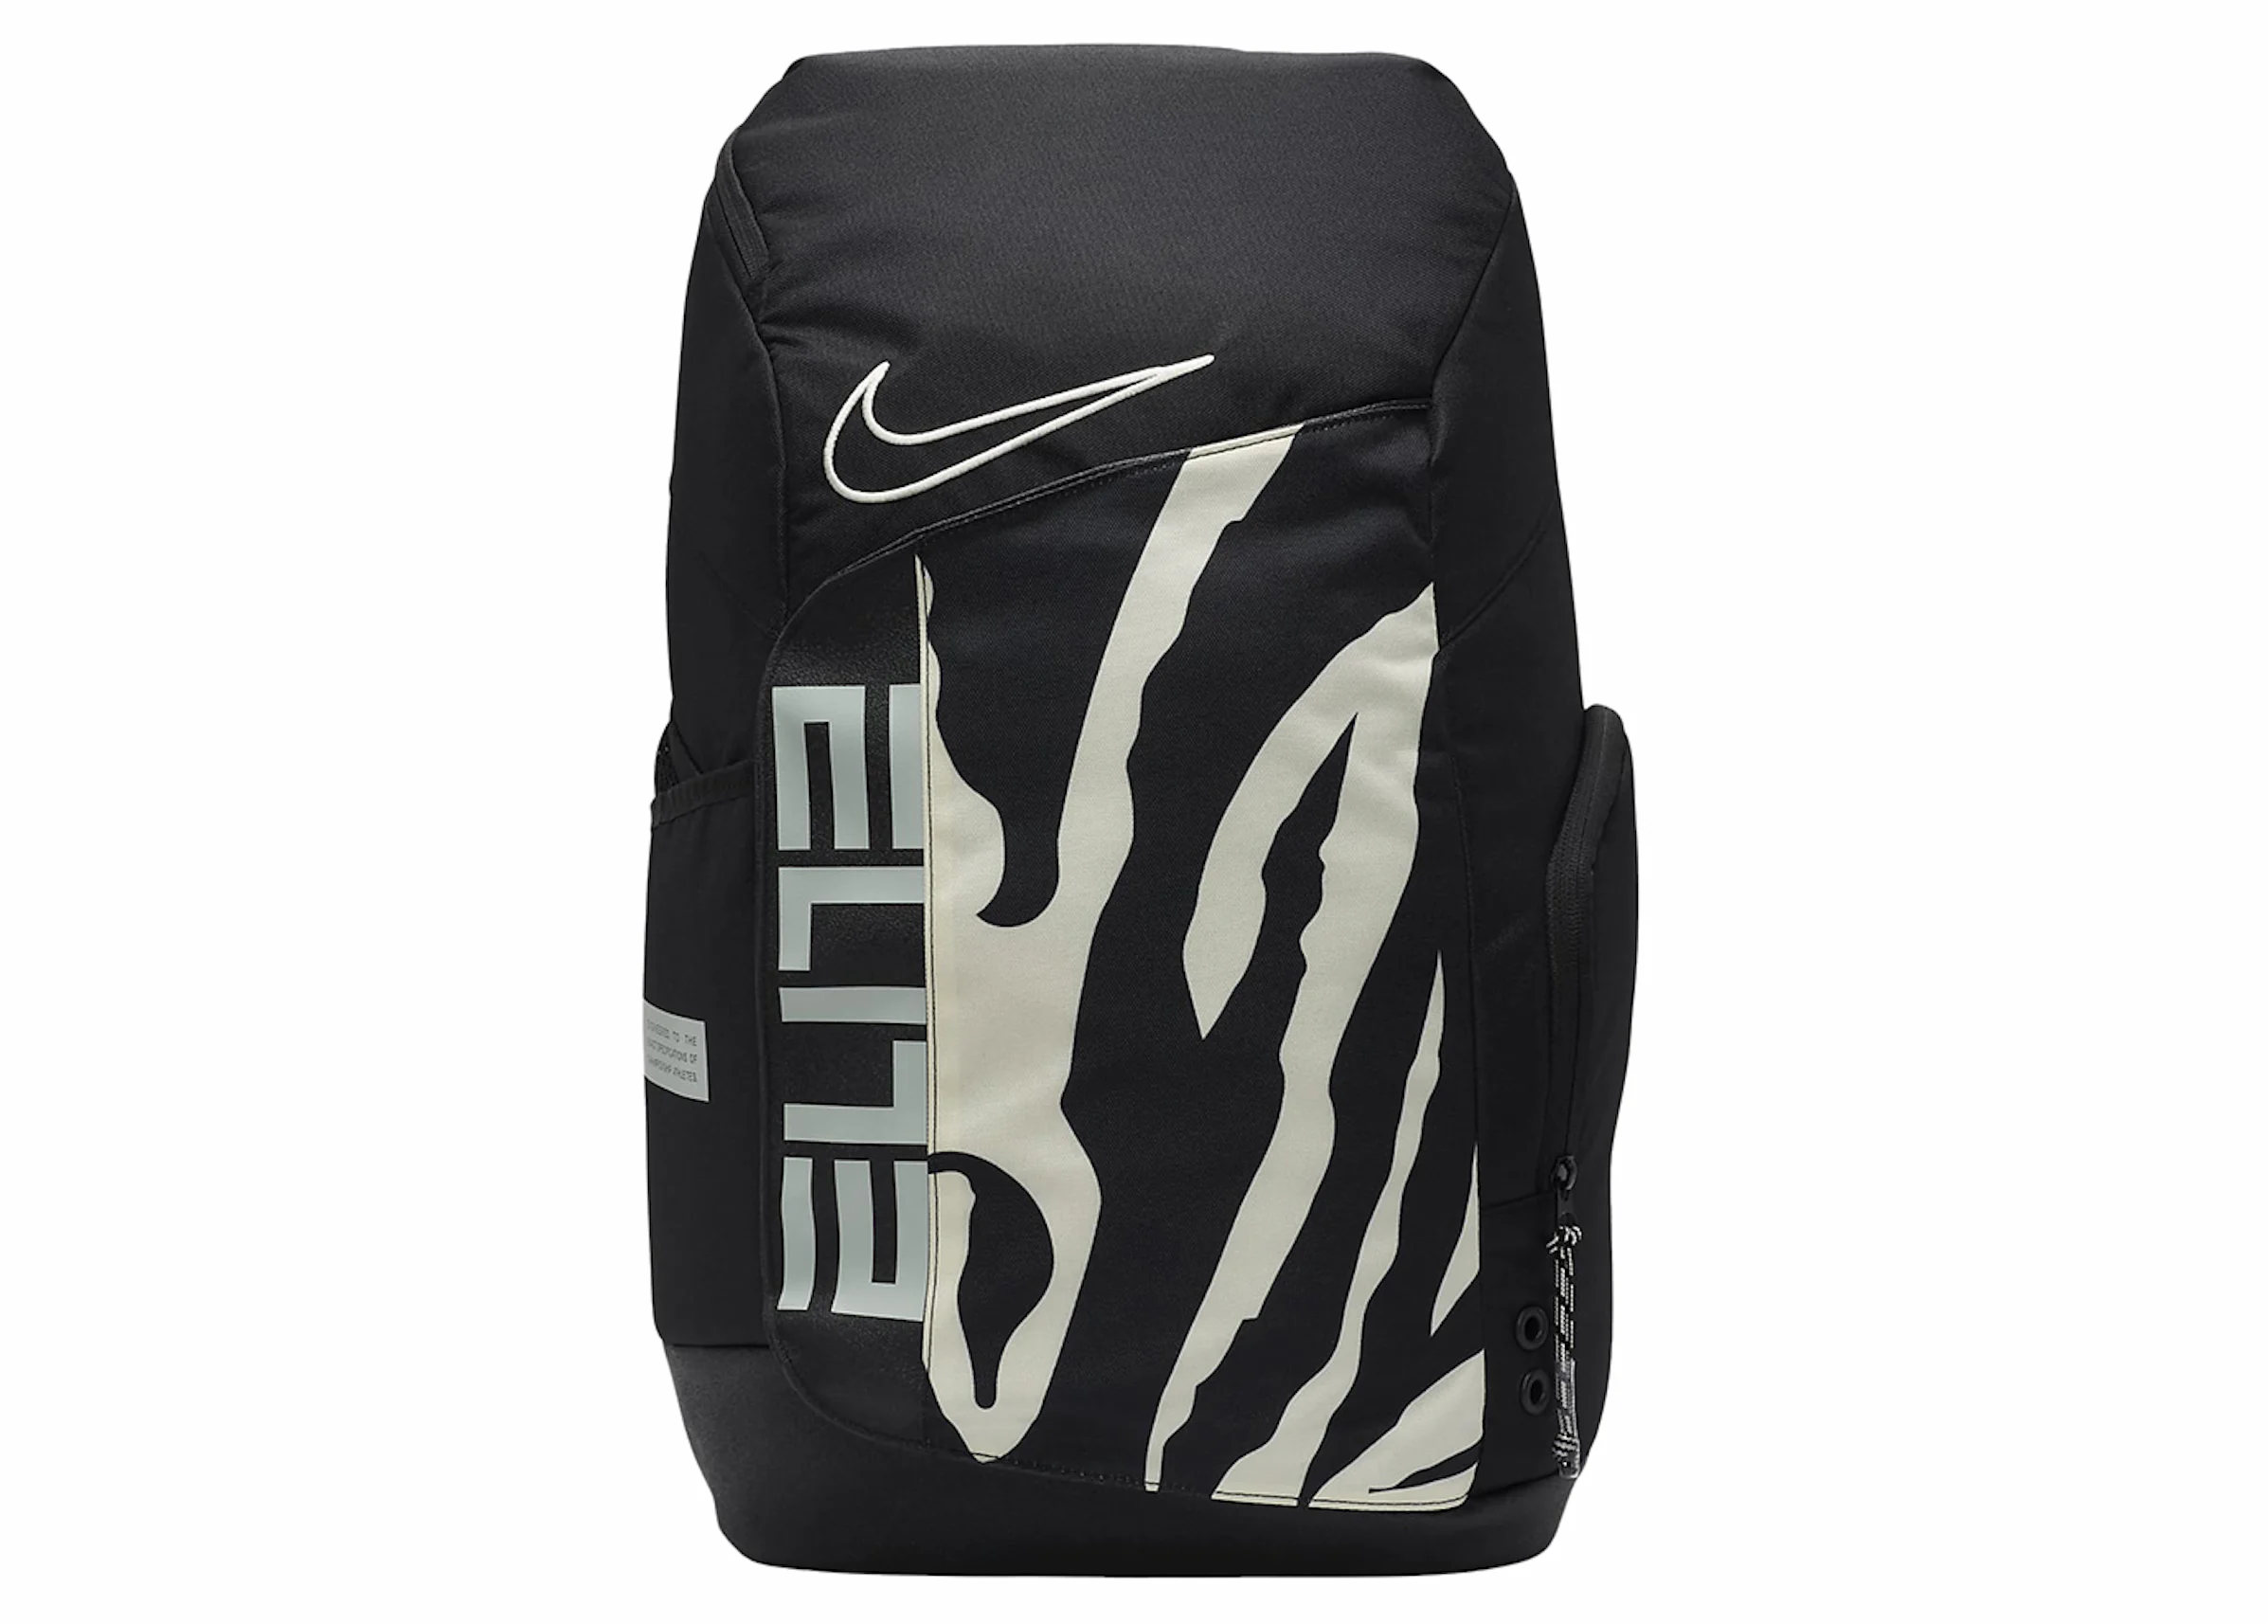 https://images.stockx.com/images/Nike-Hoops-Elite-Pro-Backpack-Core-Black-White.jpg?fit=fill&bg=FFFFFF&w=1200&h=857&fm=webp&auto=compress&dpr=2&trim=color&updated_at=1700242786&q=60